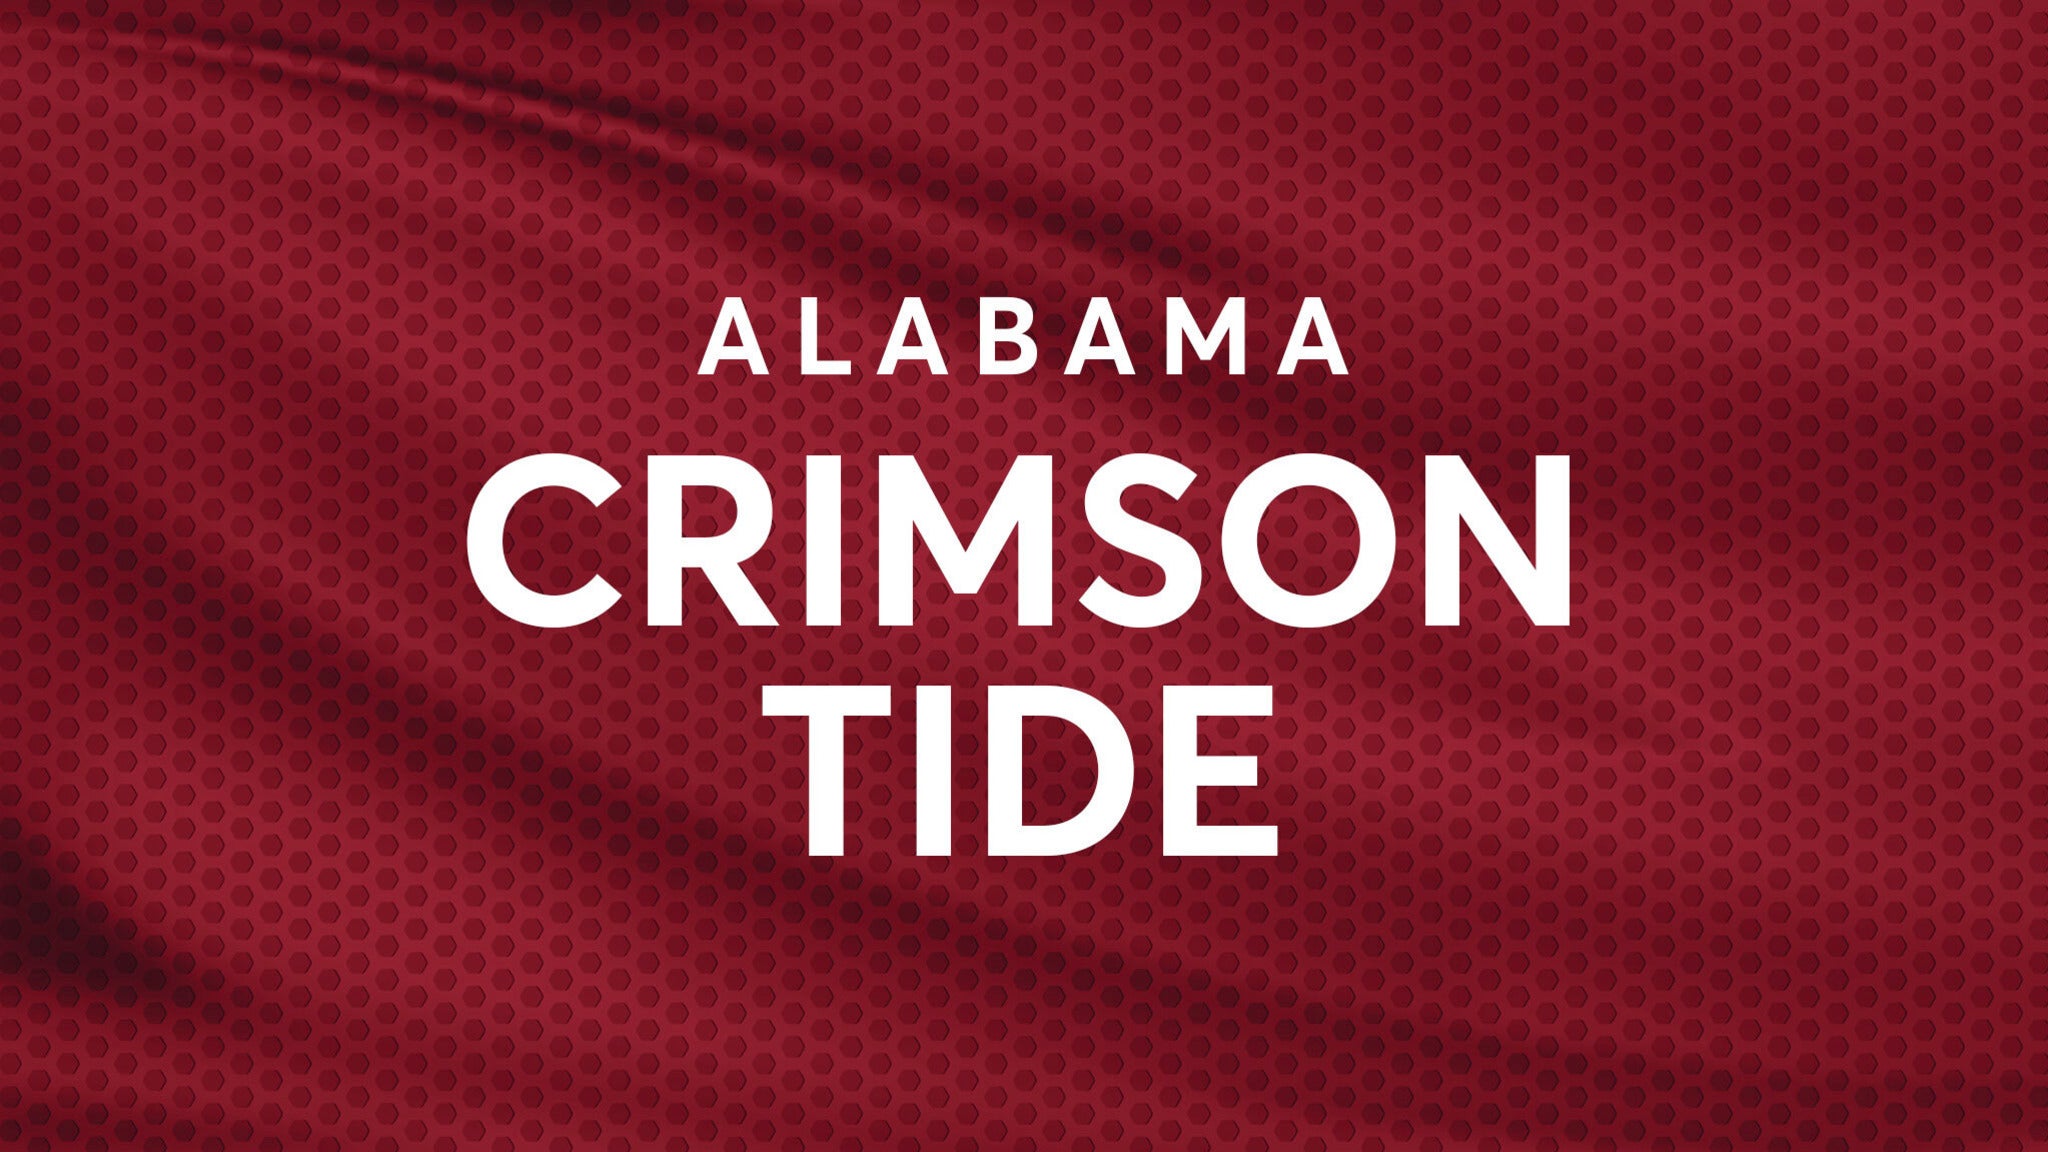 Alabama Crimson Tide Baseball vs. LSU Tigers Baseball